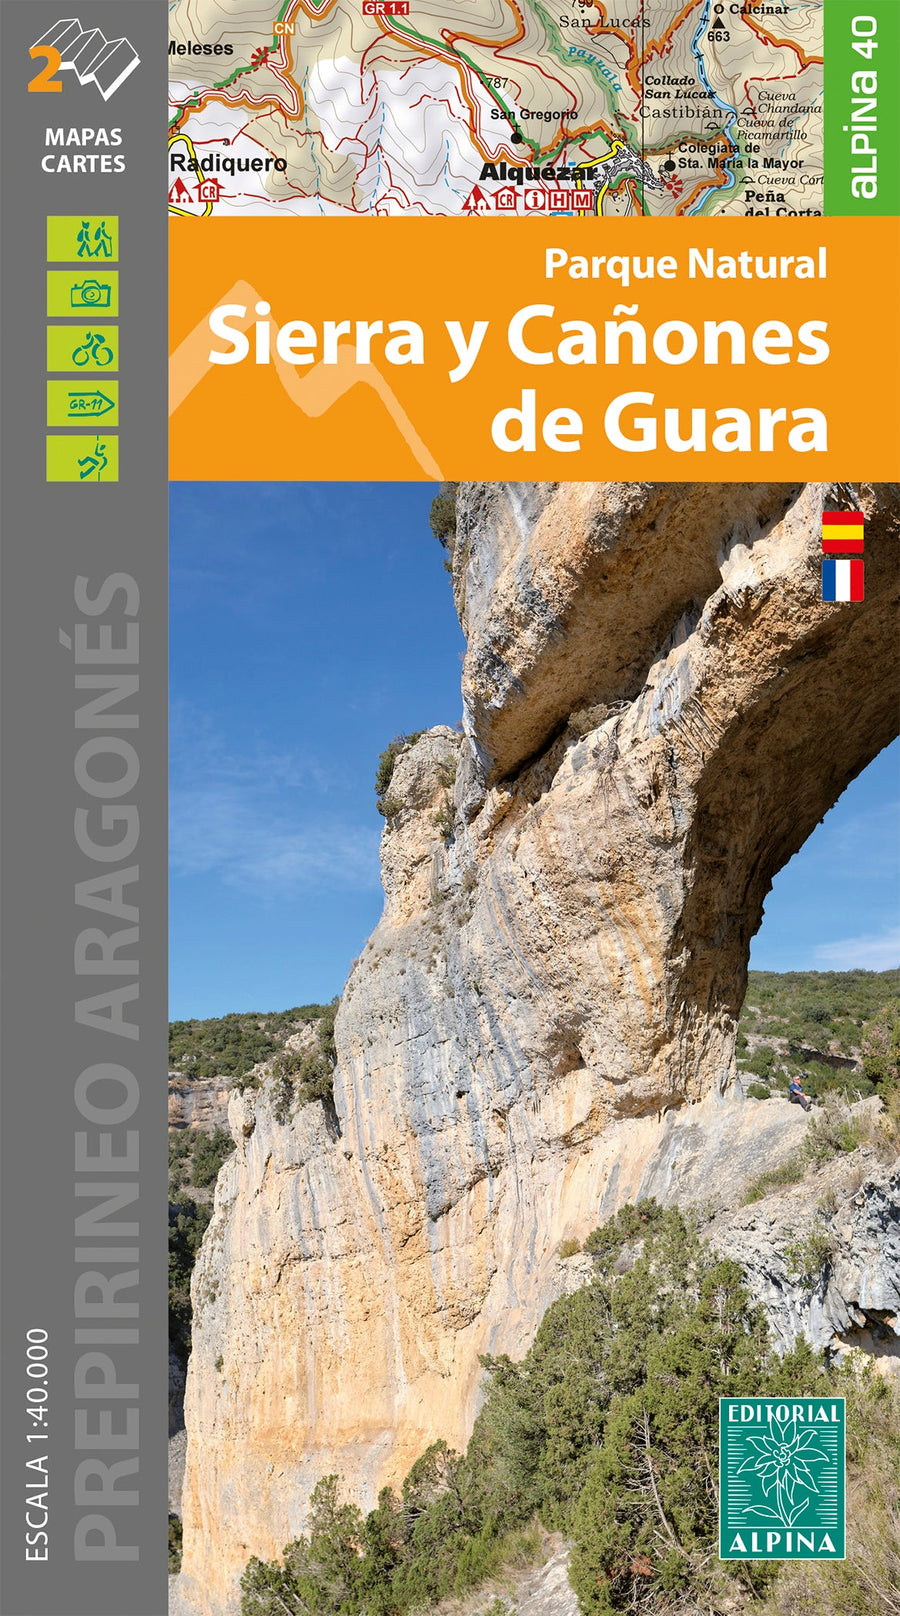 Carte de randonnée - Sierra de Guara (Aragon, Espagne) | Editorial Alpina carte pliée Editorial Alpina 